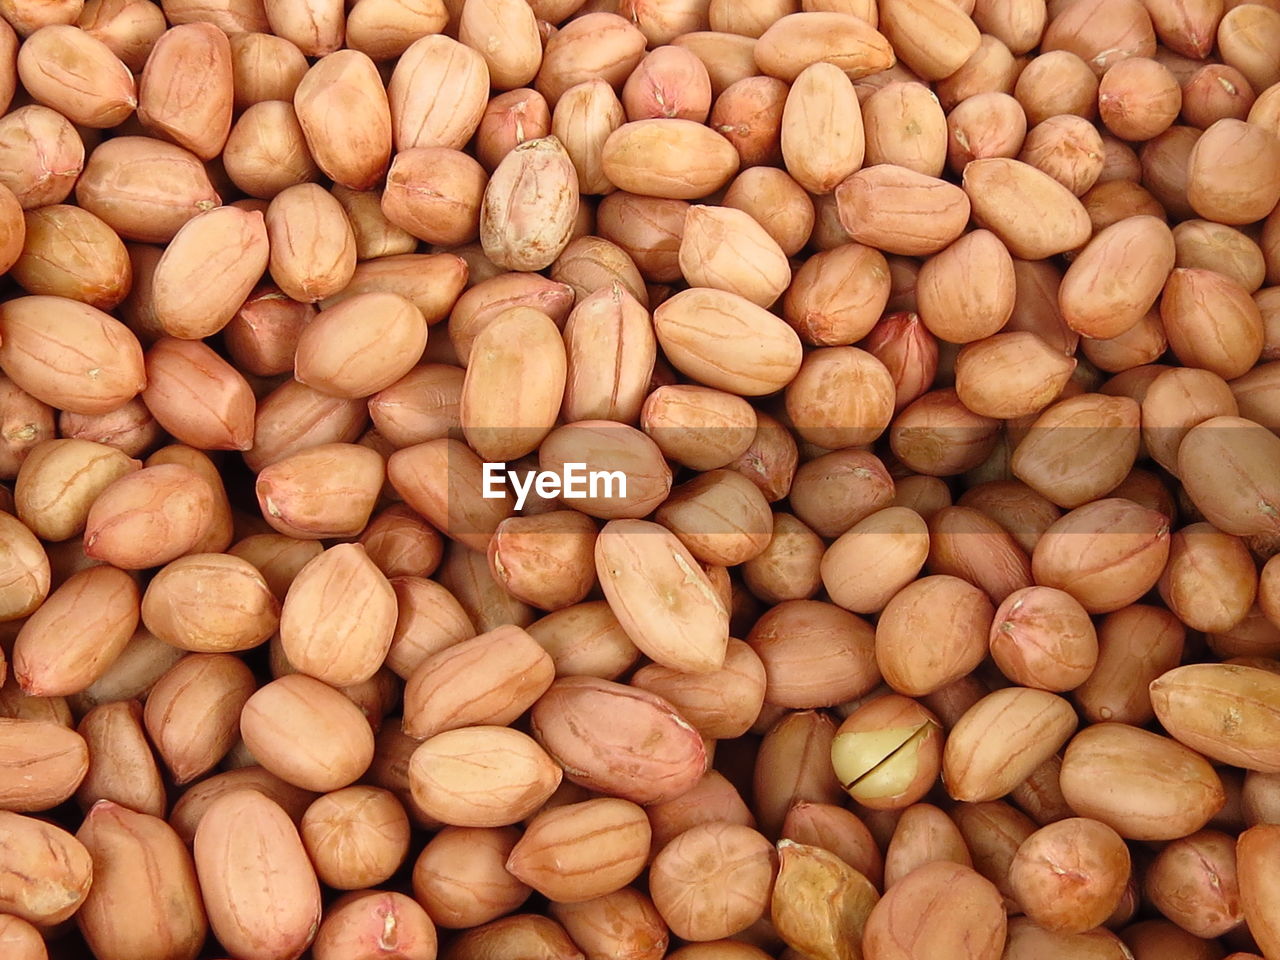 Peanut is an important economic crop